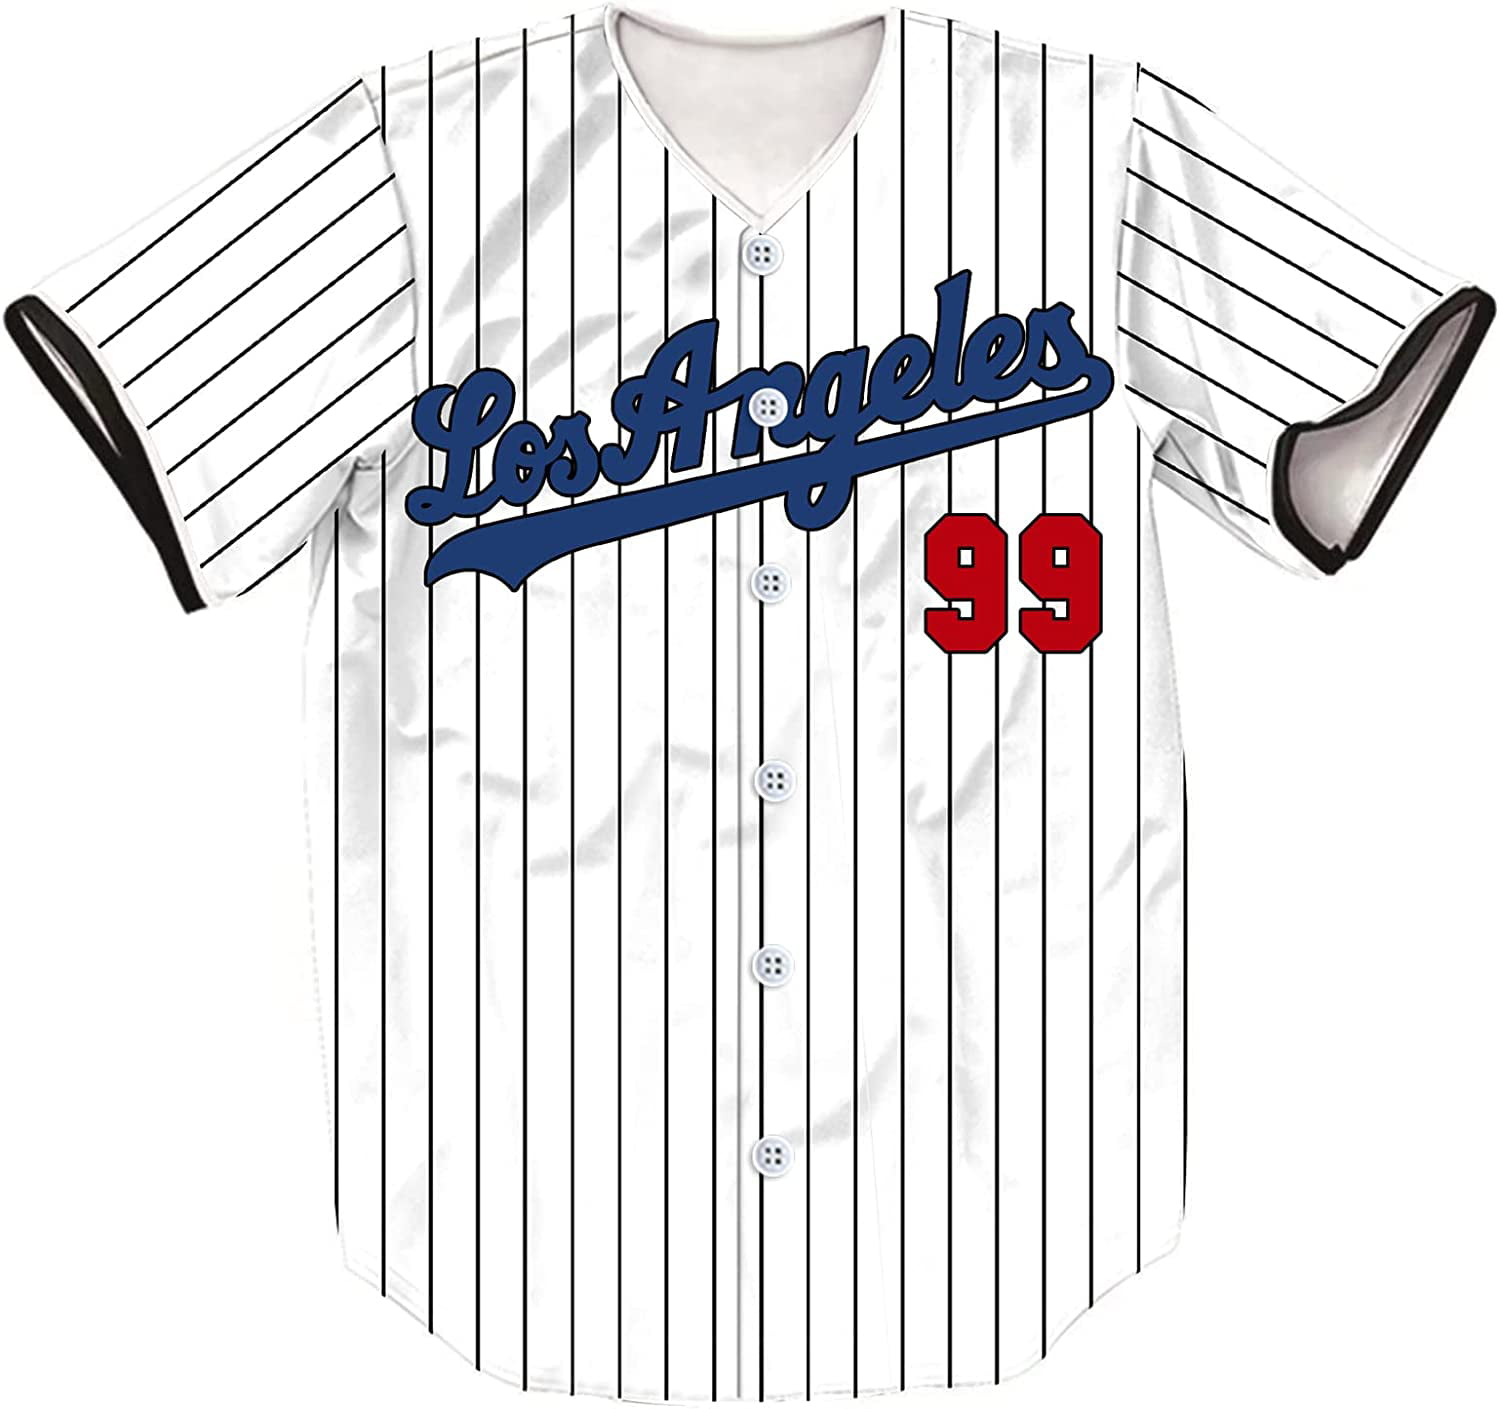 Los Angeles 99 Printed Baseball Jersey LA Baseball Team Shirts for  Men/Women/Young 